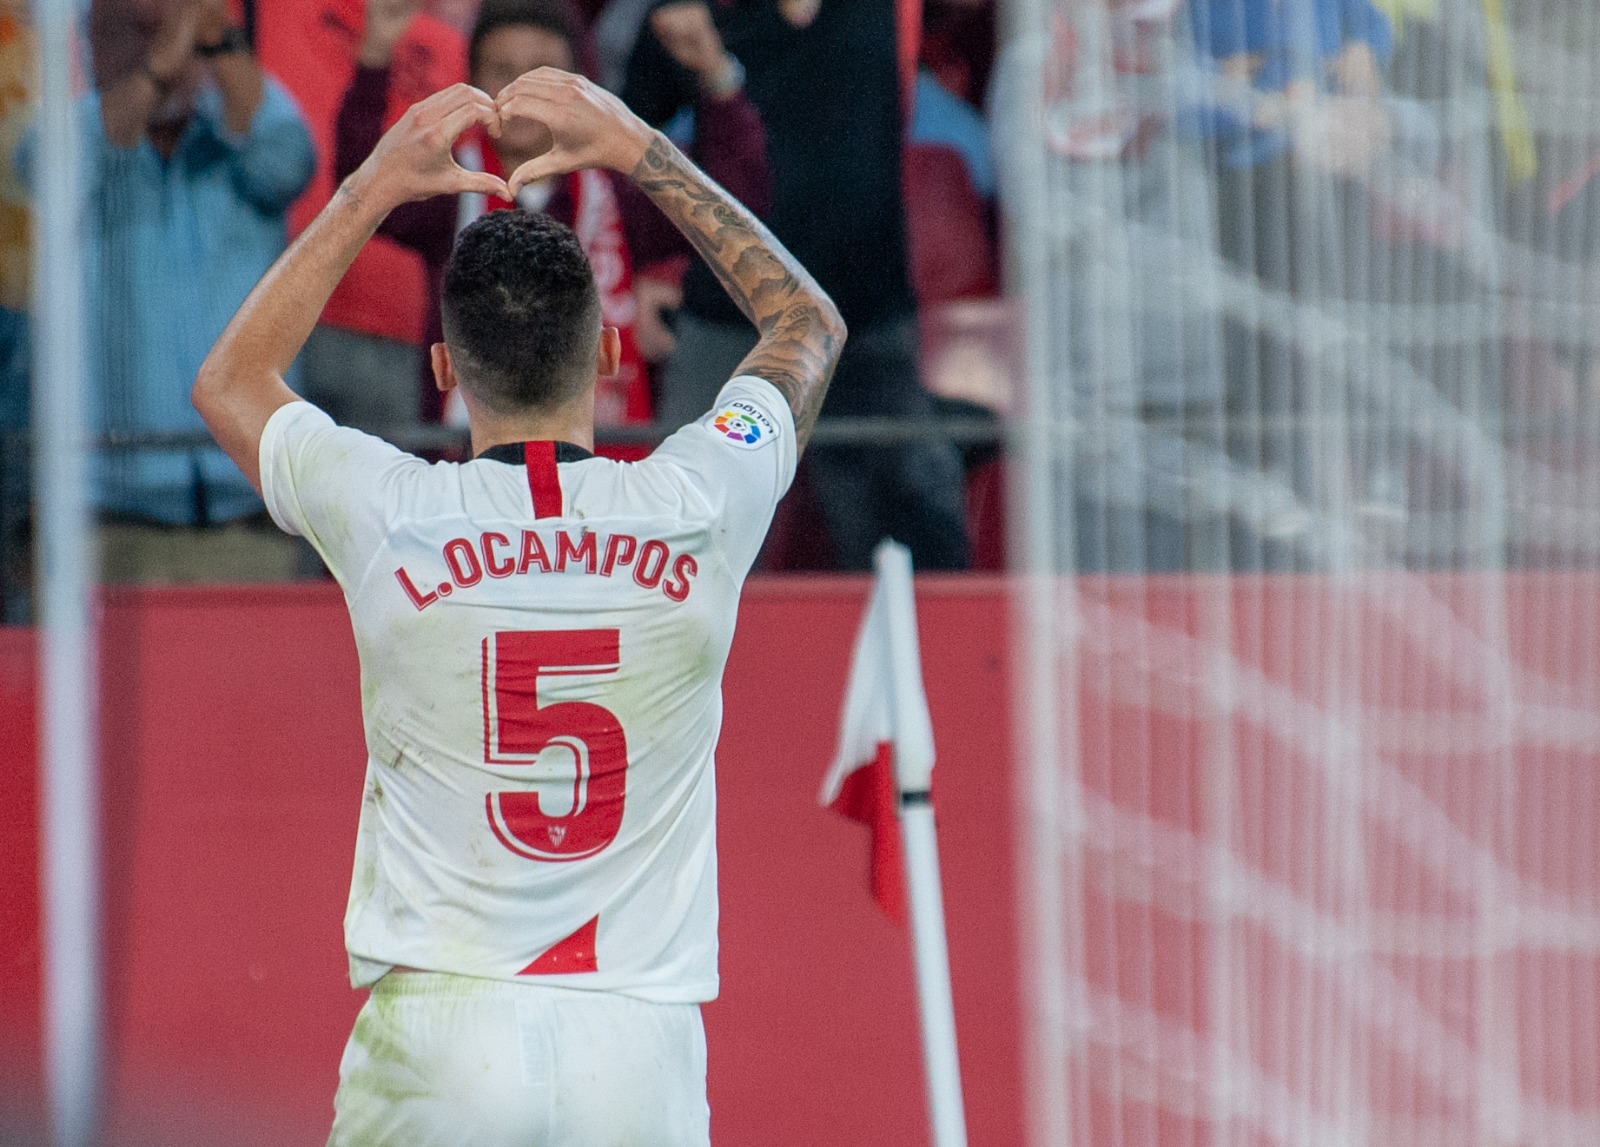 Ocampos celebrates after scoring against Getafe 